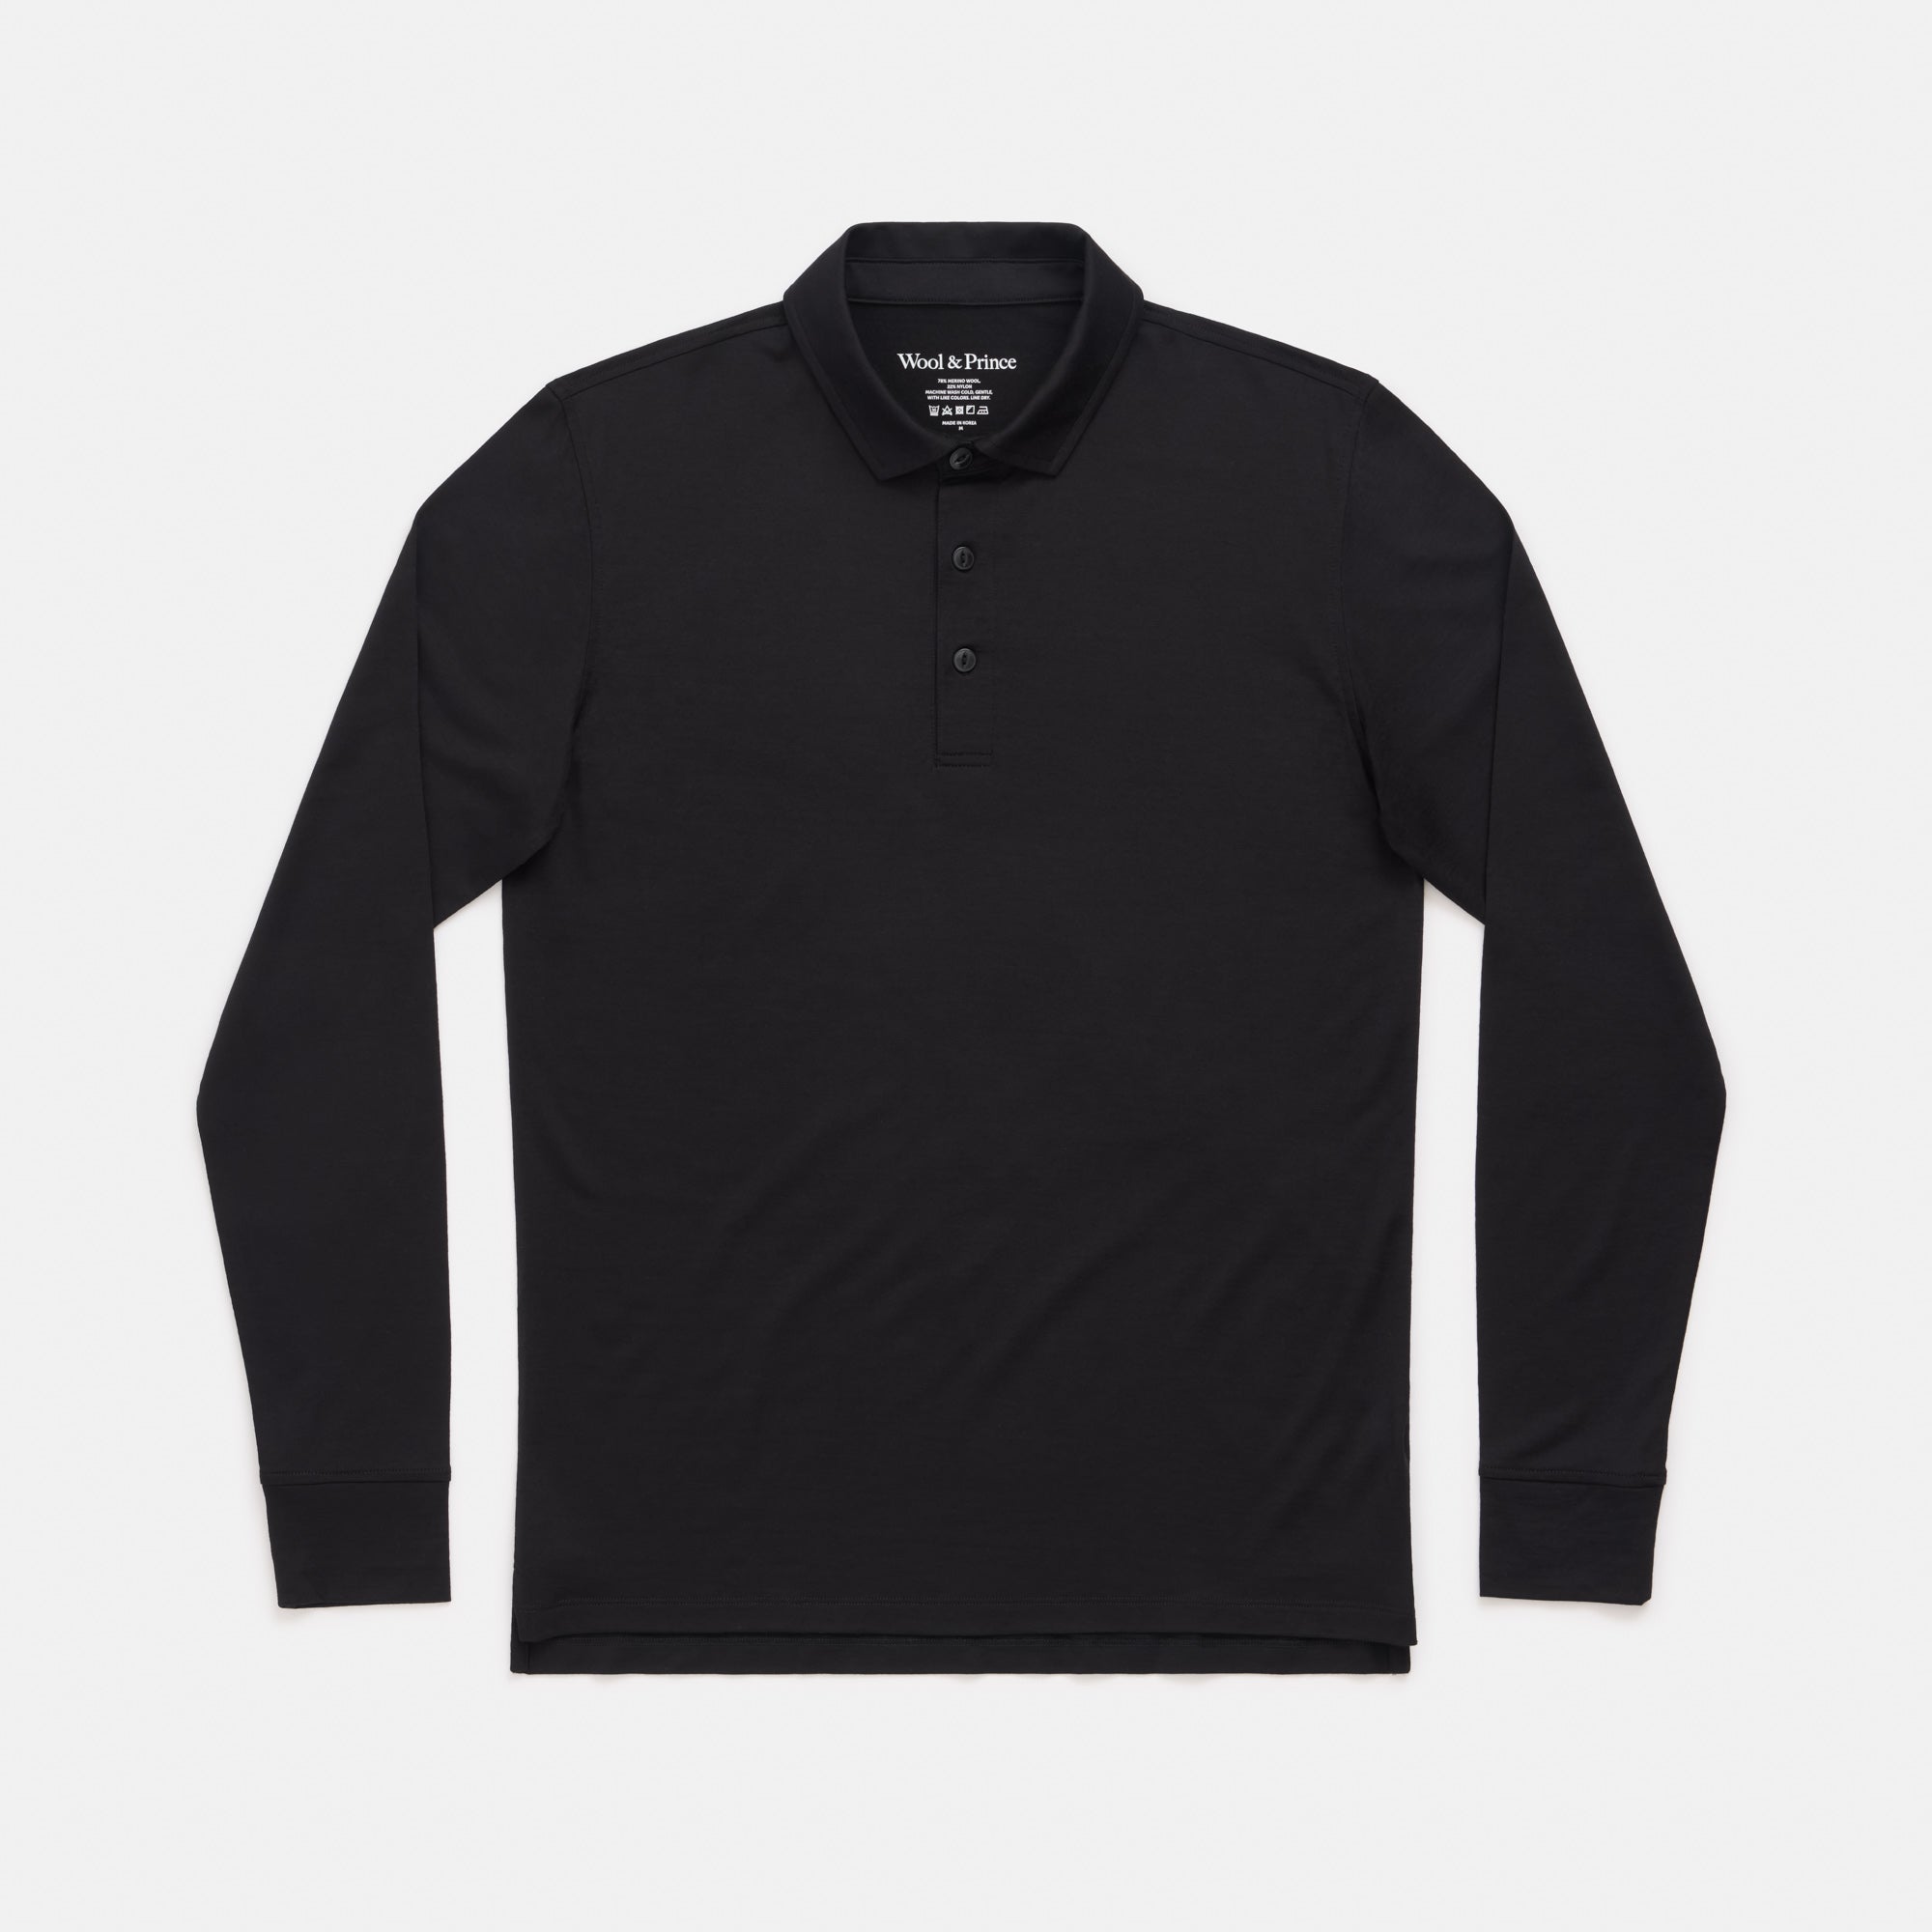 Merino Wool Long Sleeve Polo | Black | Wool&Prince